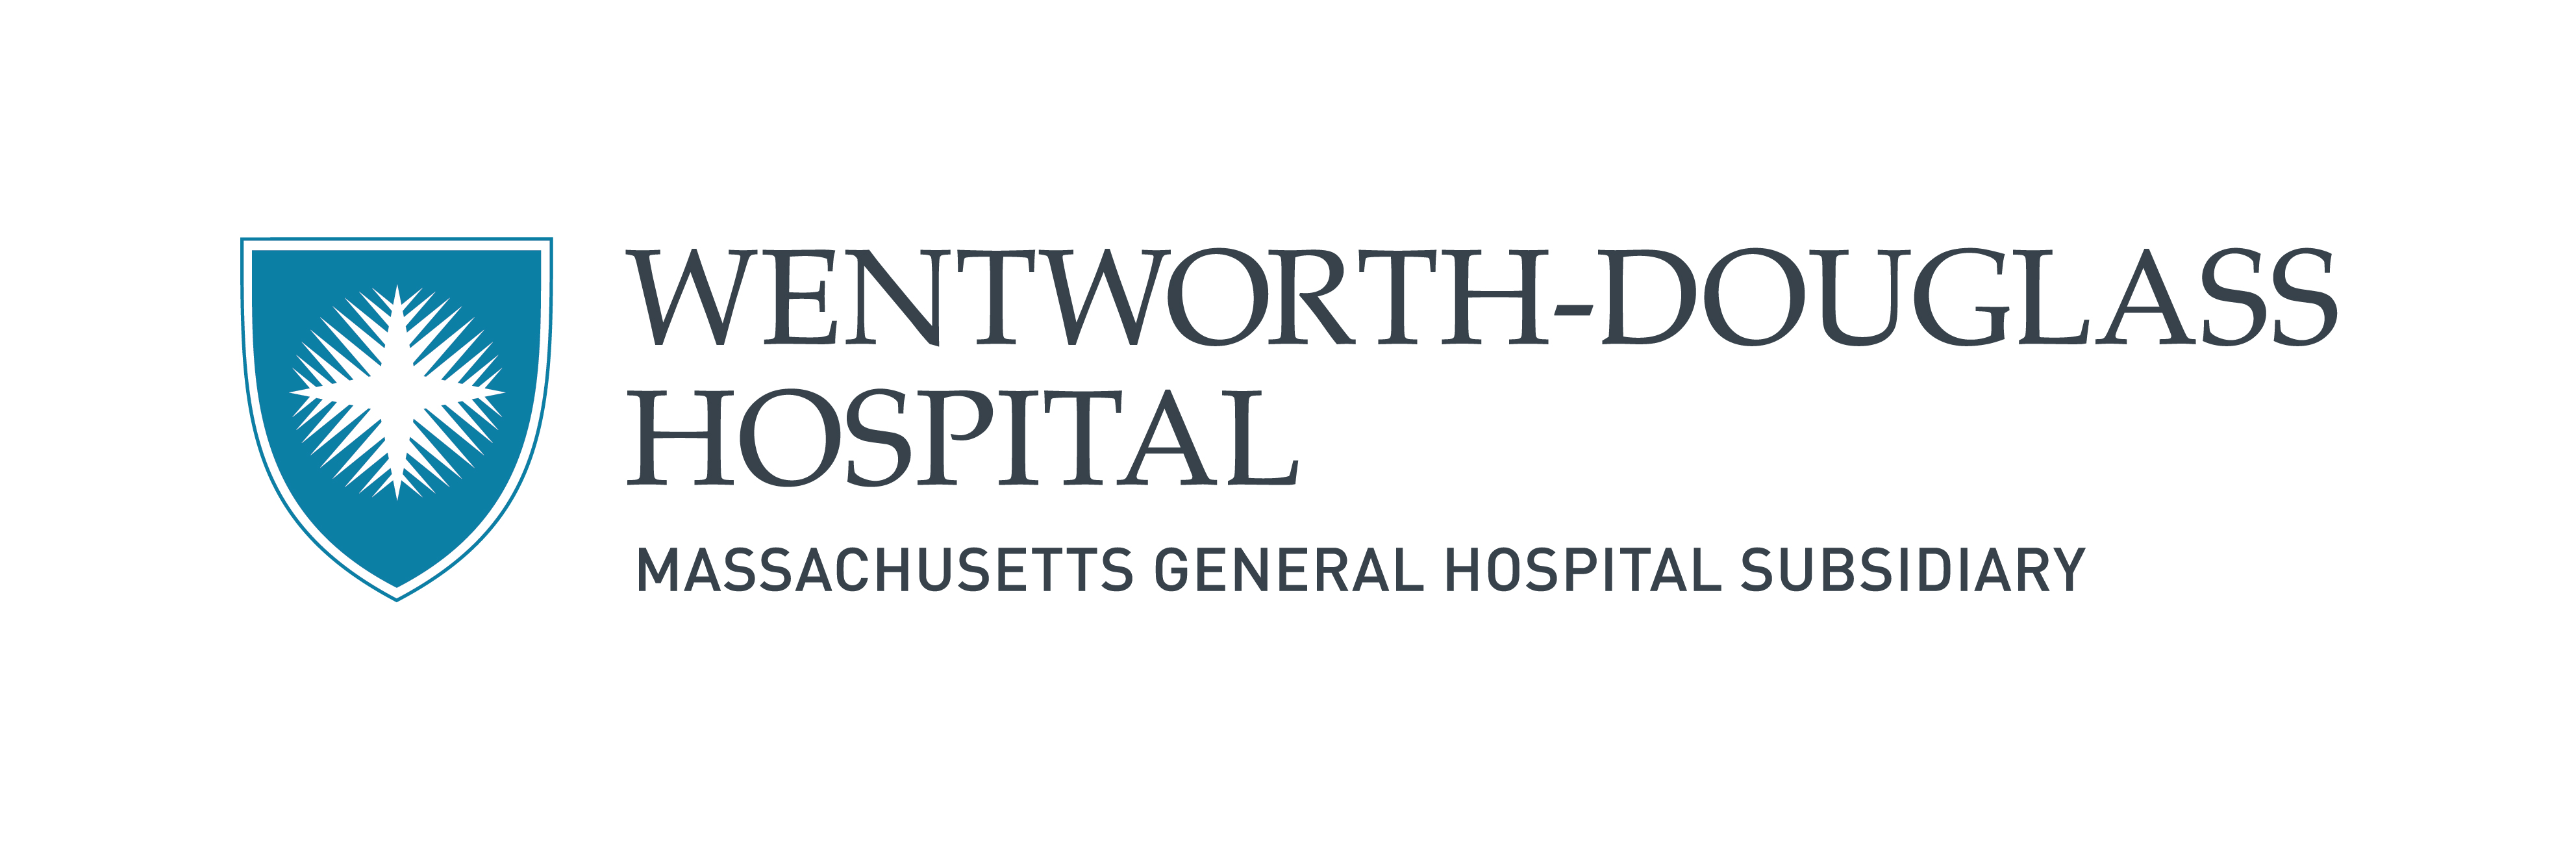 Wentworth Douglass Hospital